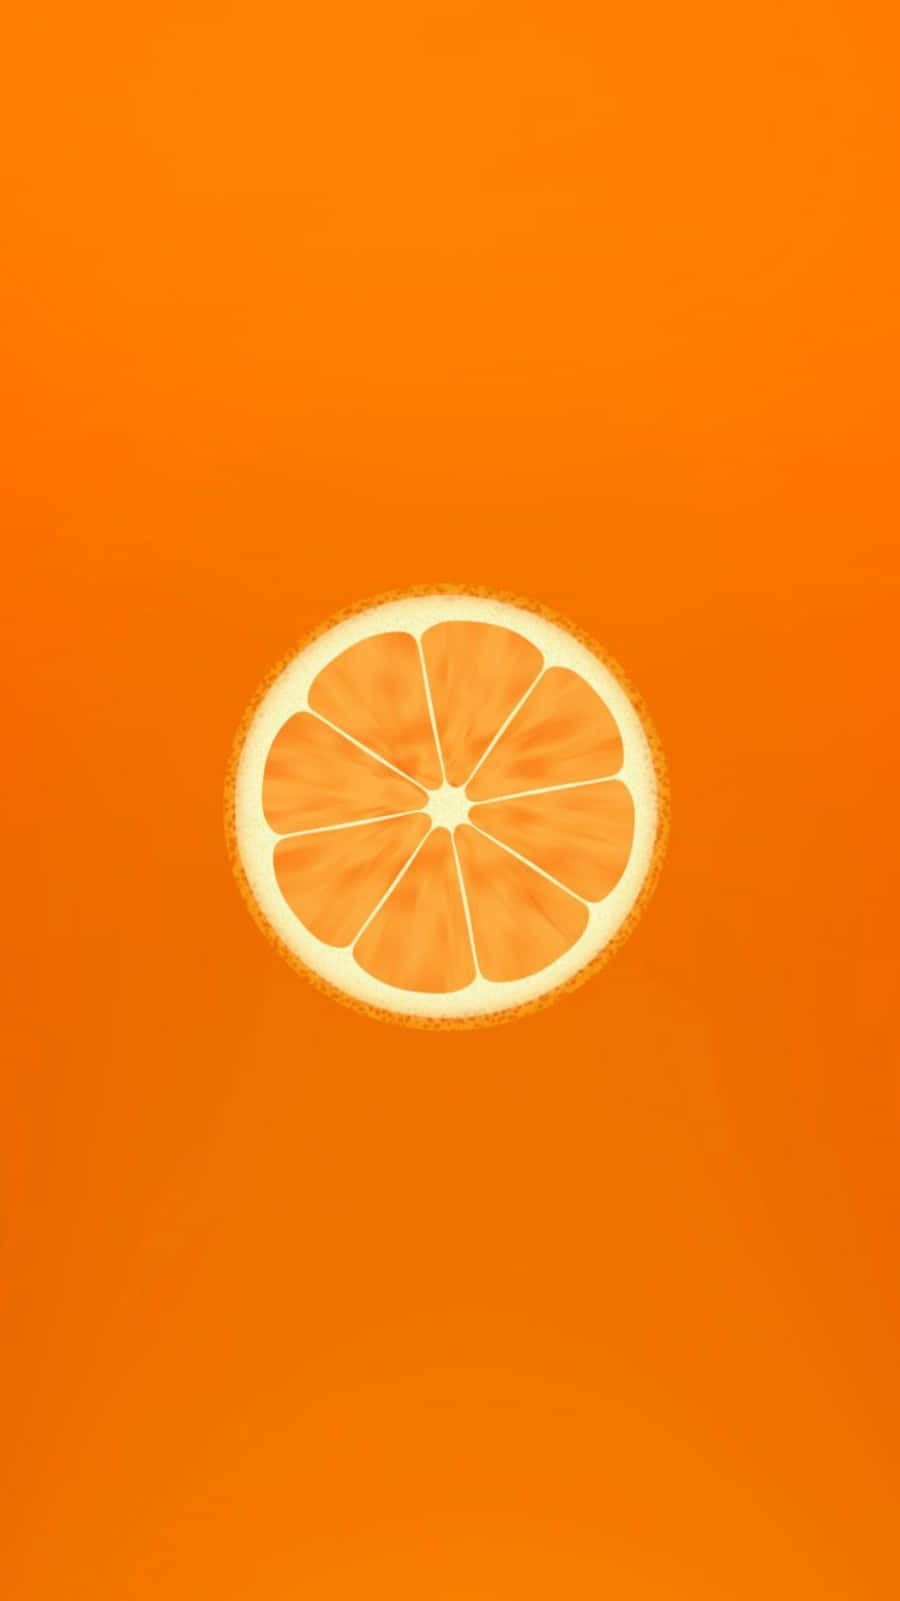 Cute Orange Slice Digital Art